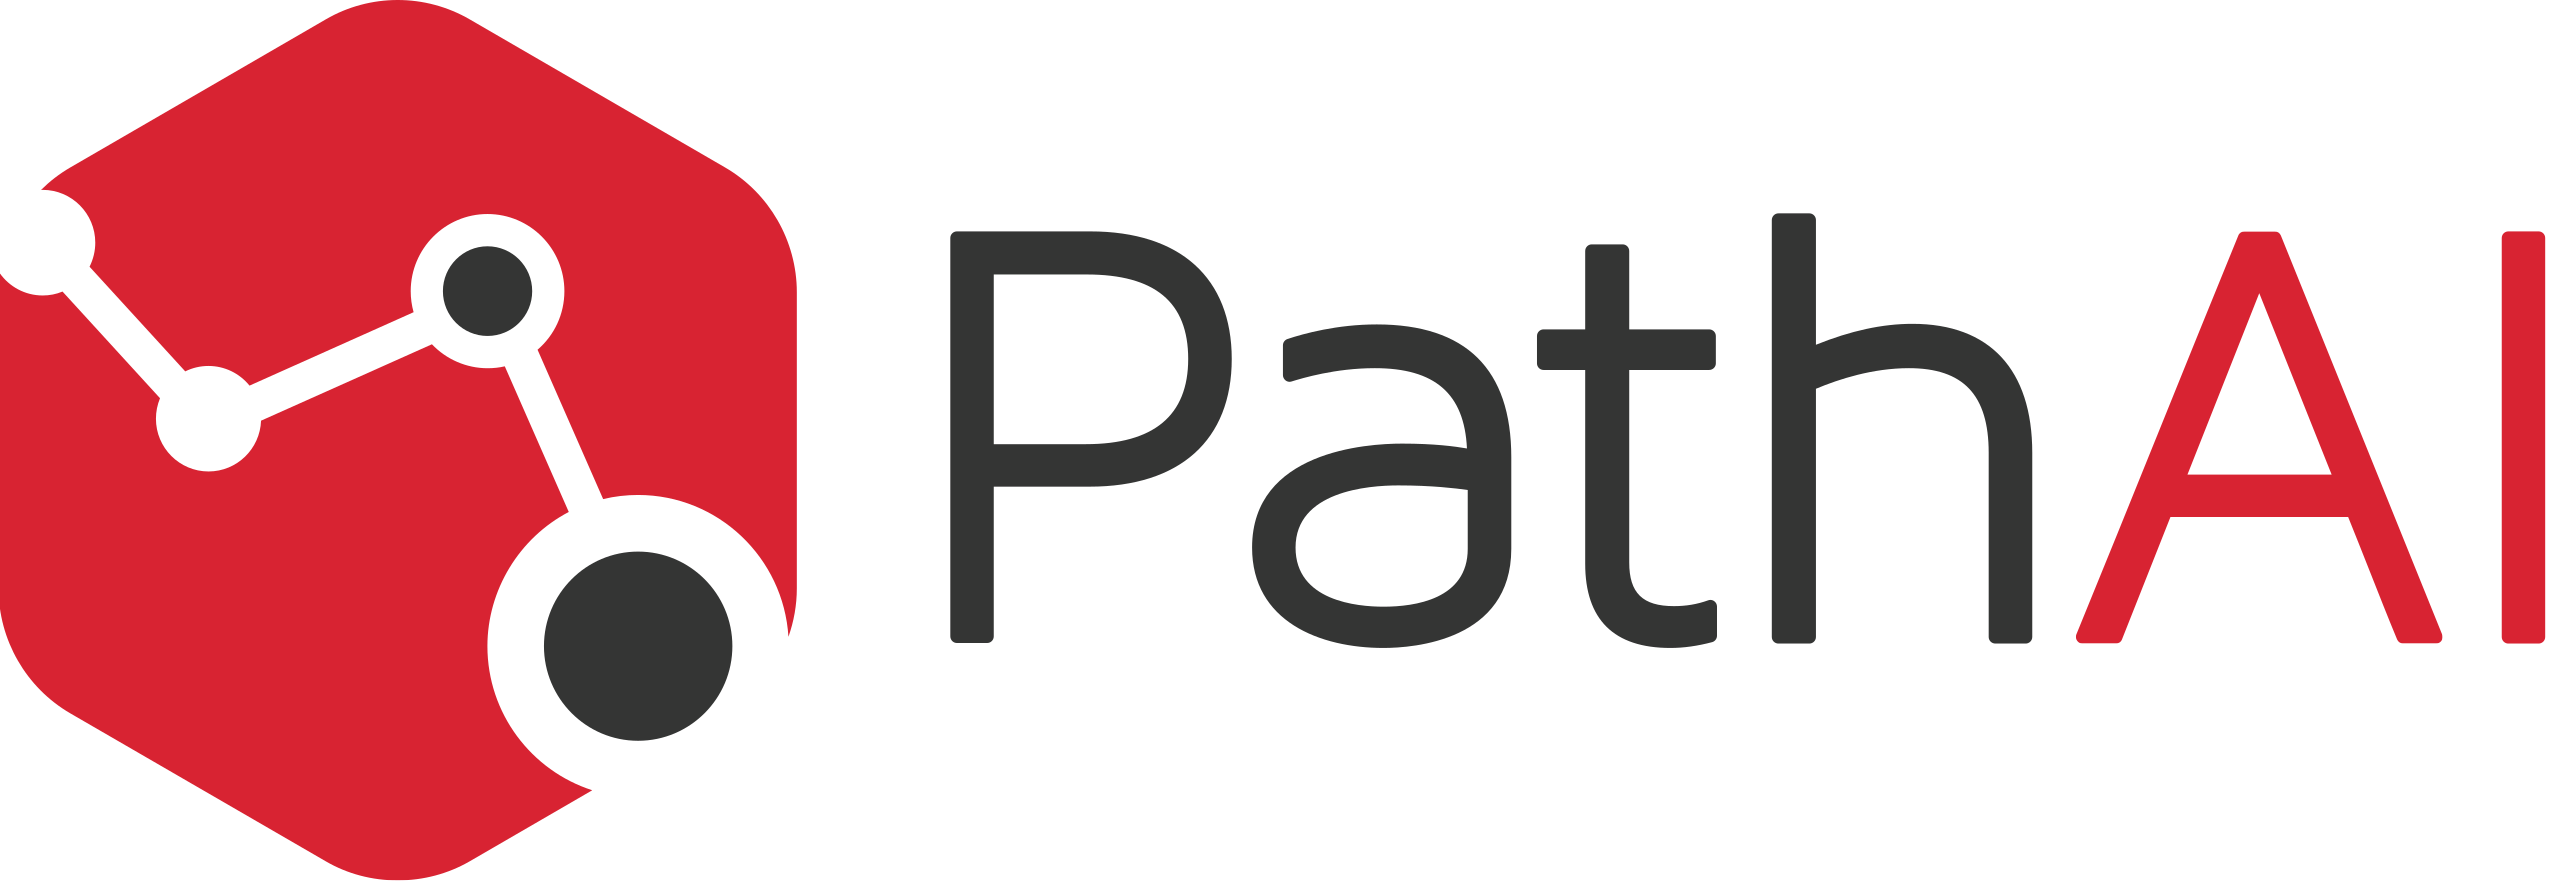 PathAI